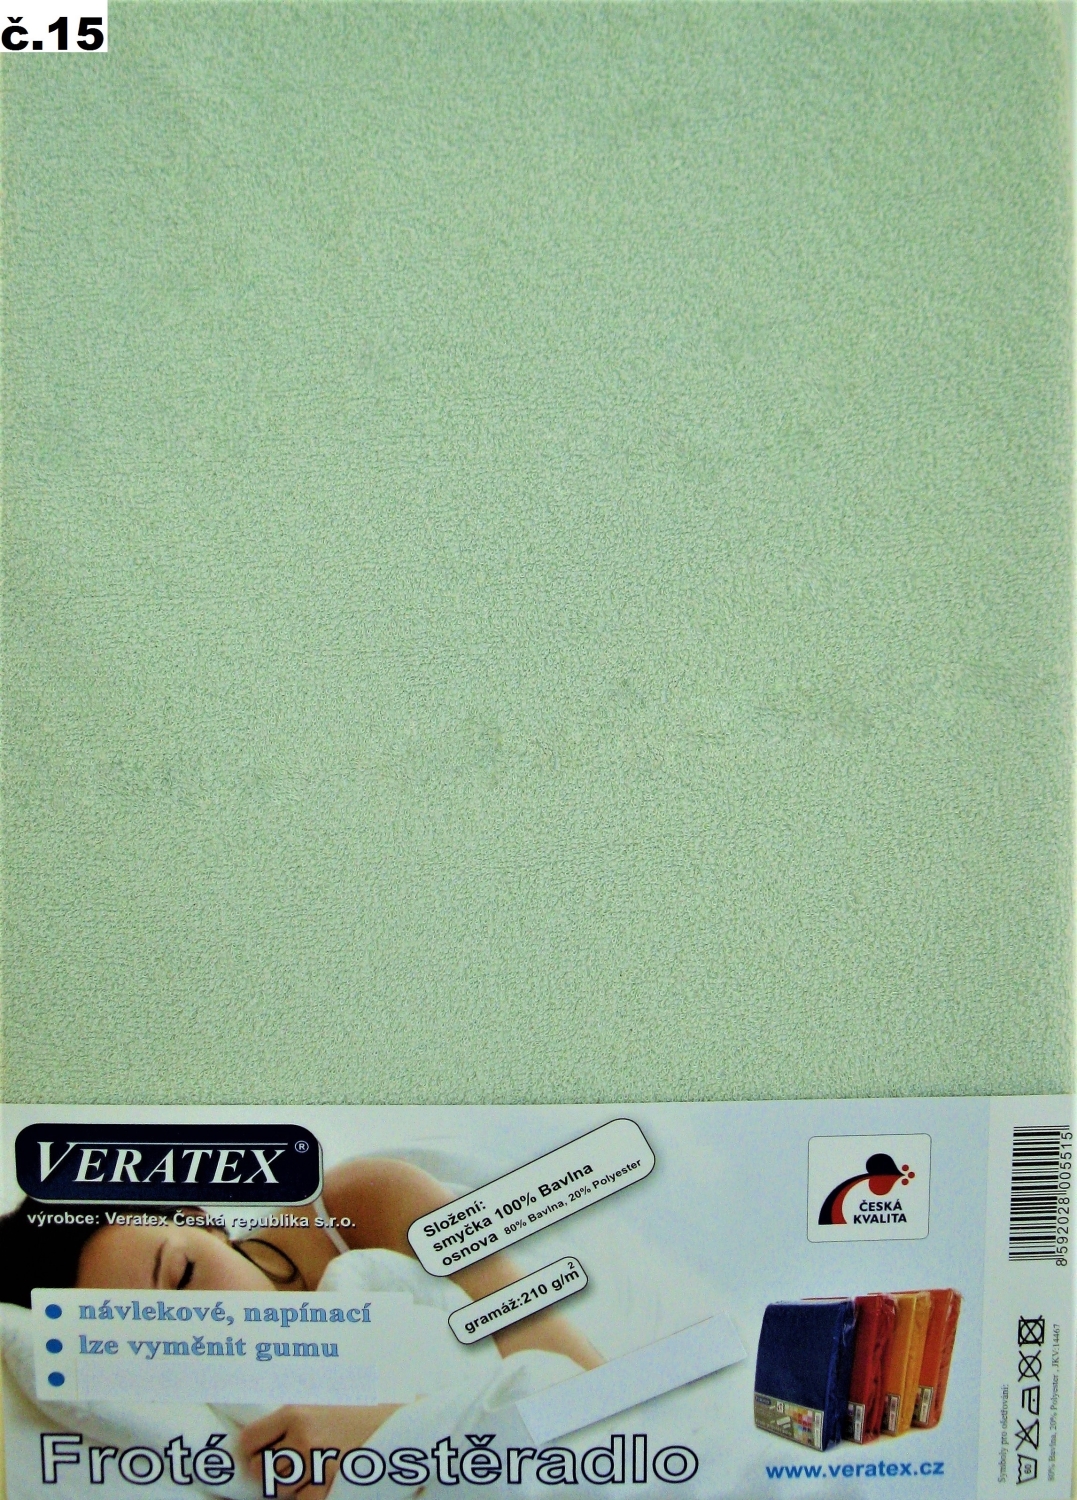 Veratex Froté prostěradlo 80x200/16 cm (č.15 sv.zelená) 80 x 200 cm